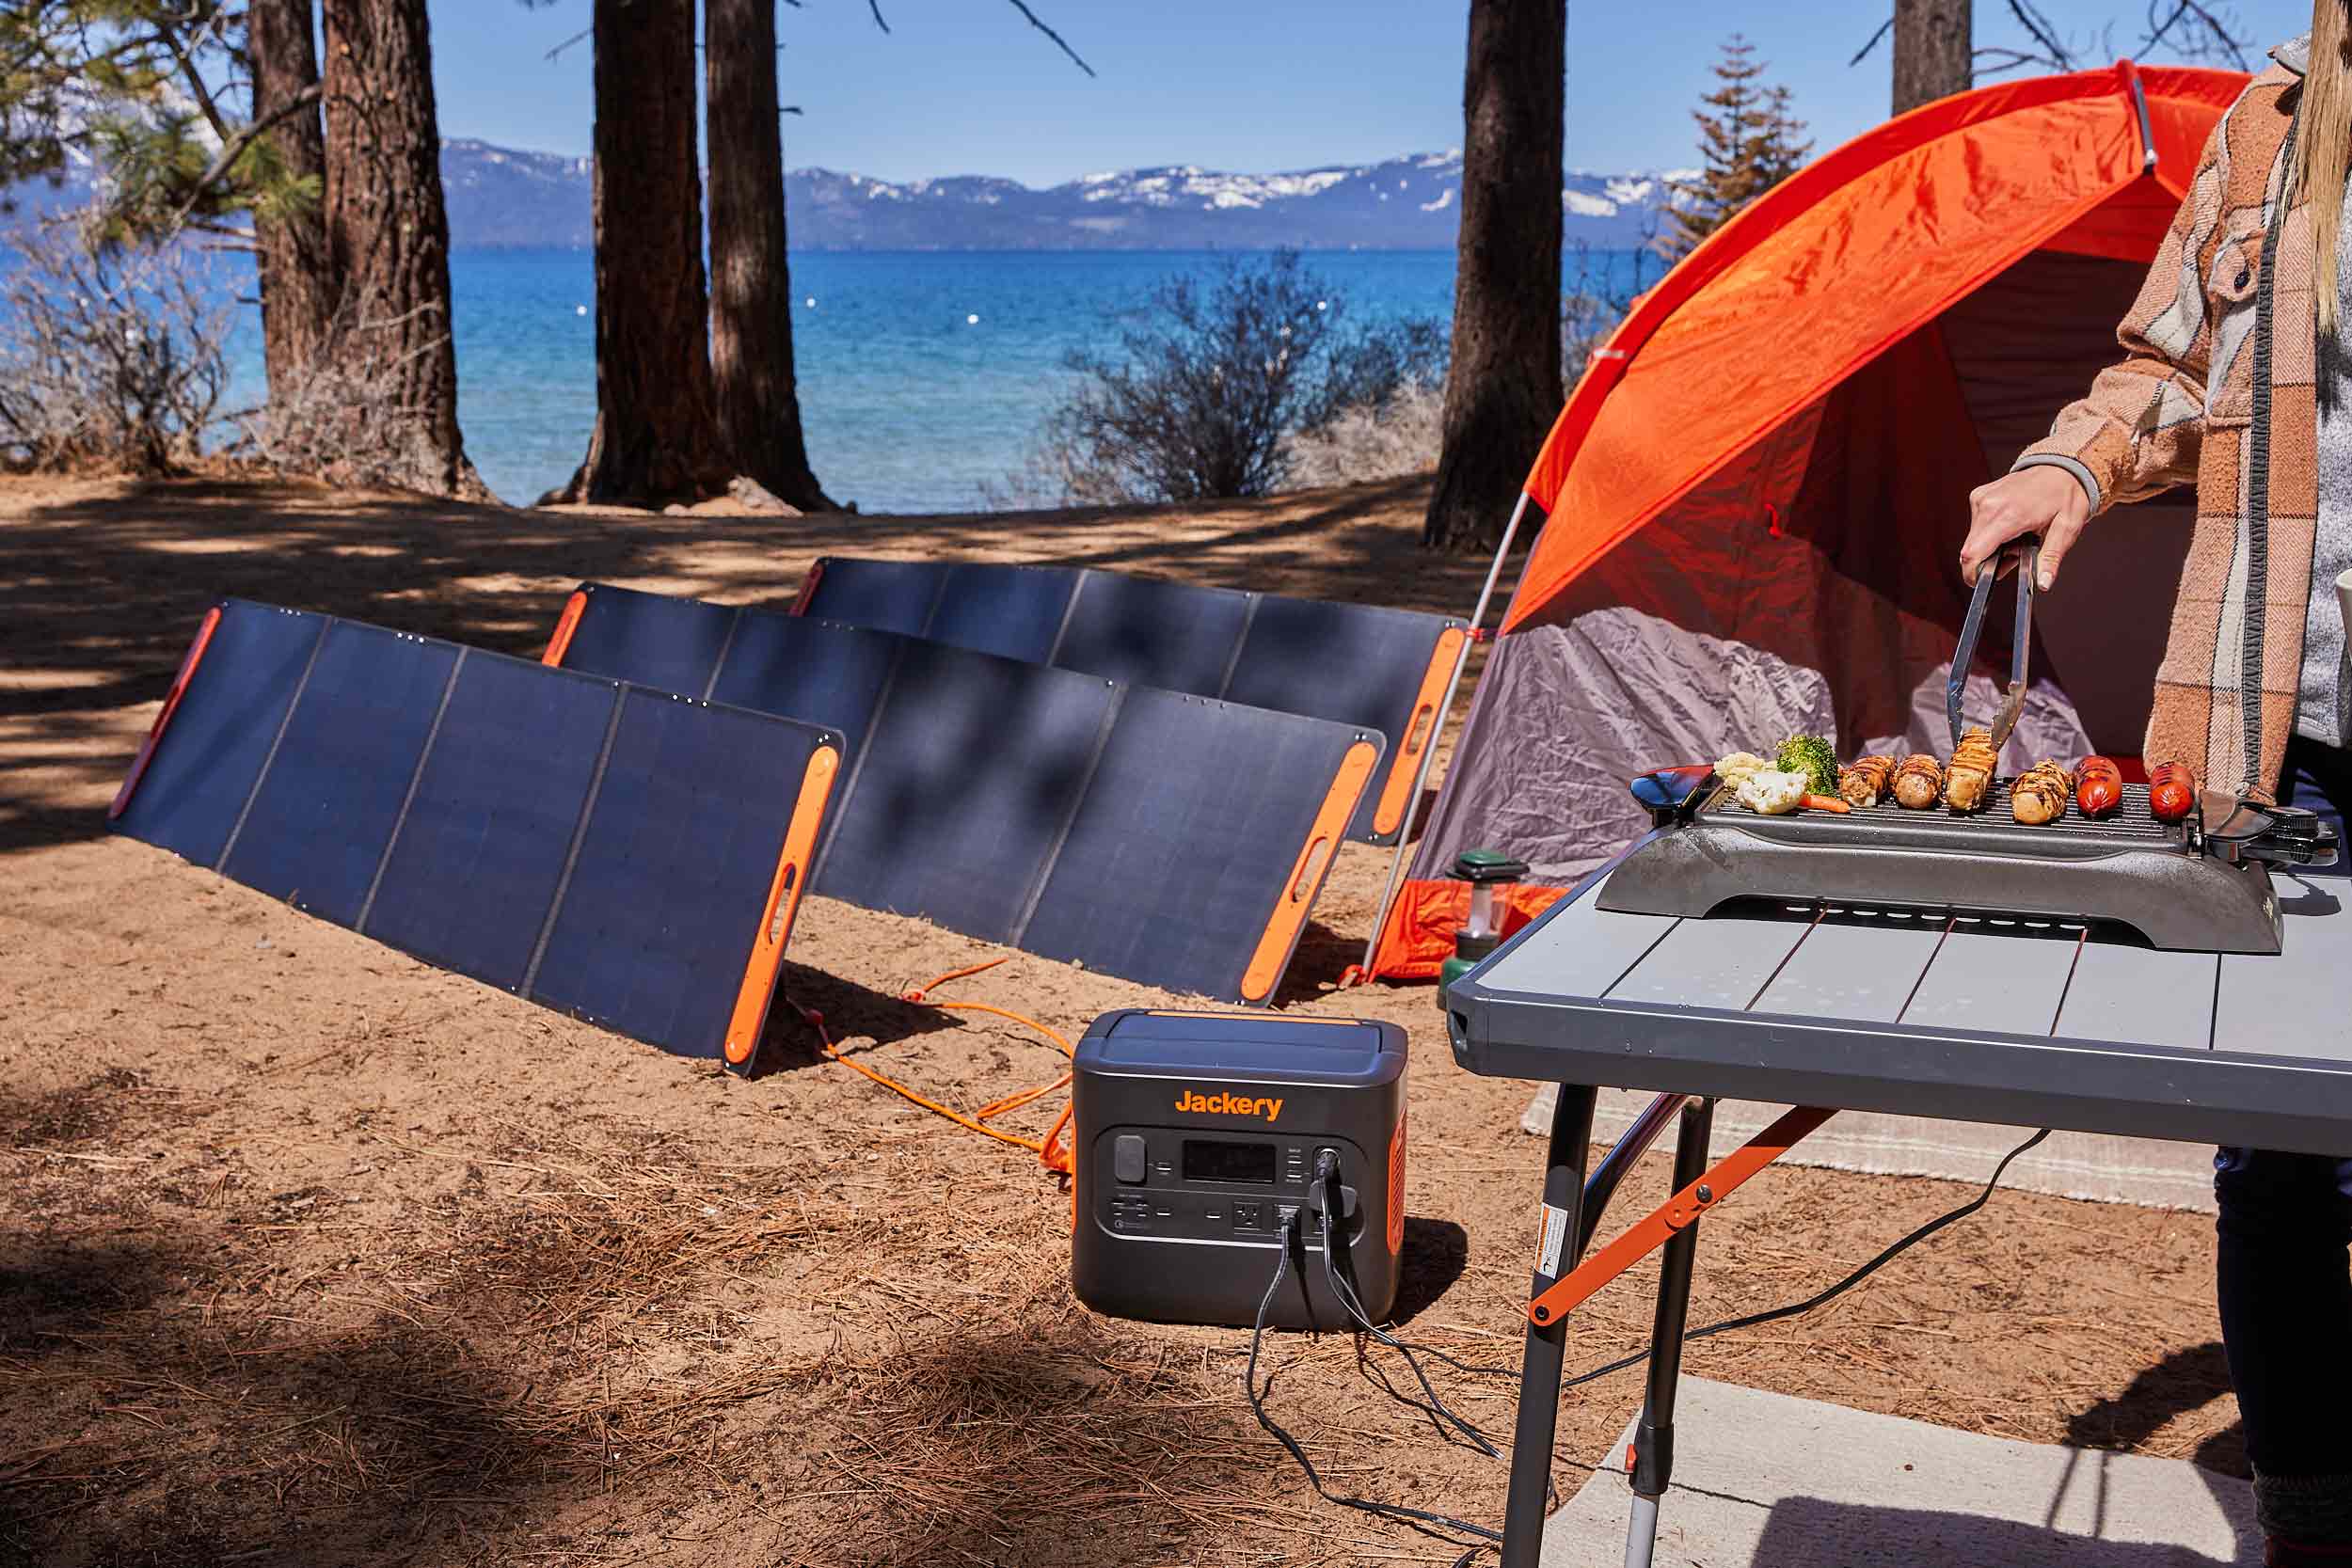 Jackery solar generator for outdoor BBQ